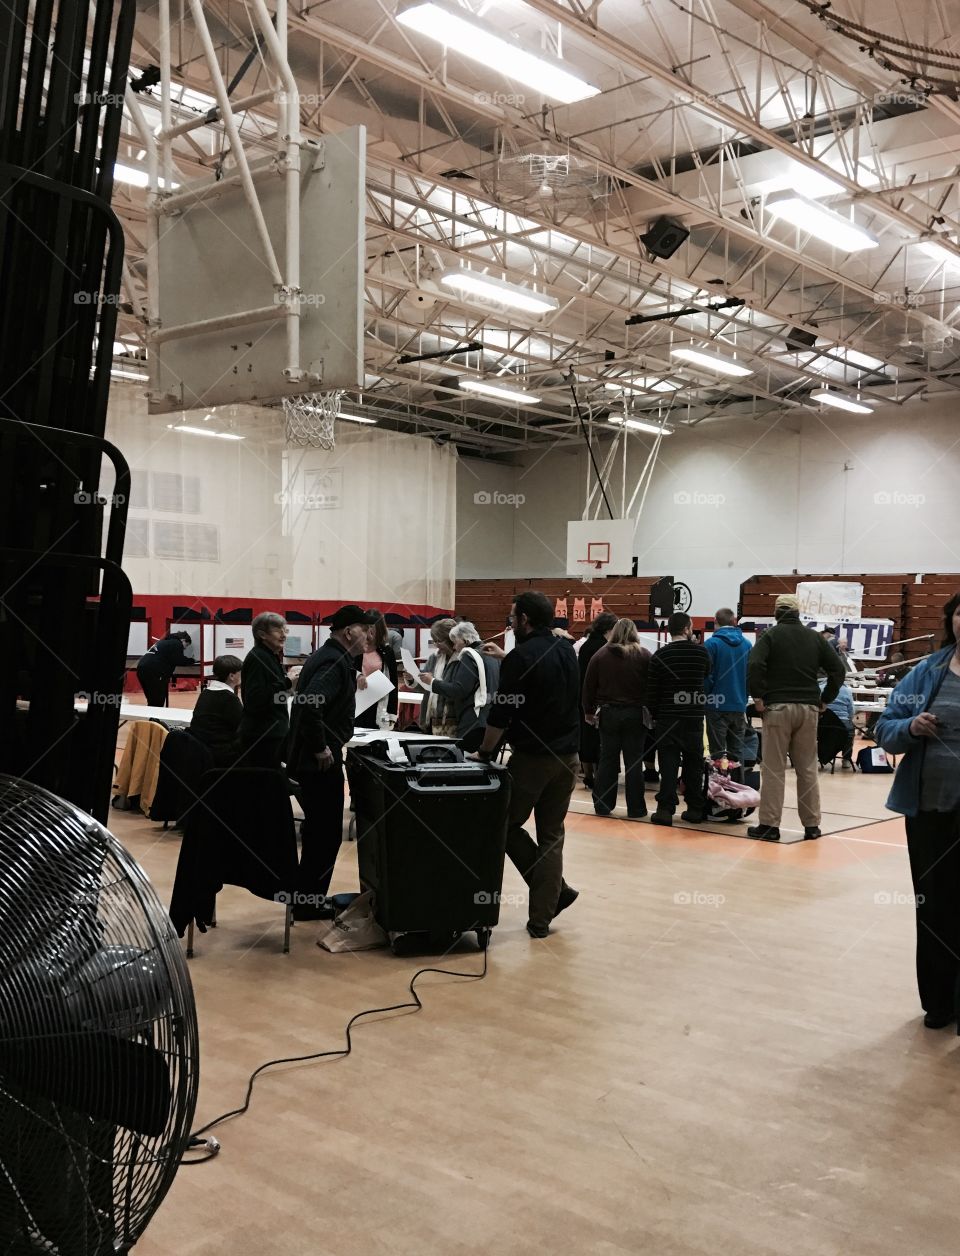 Voting in Massachusetts School Gymnasium 